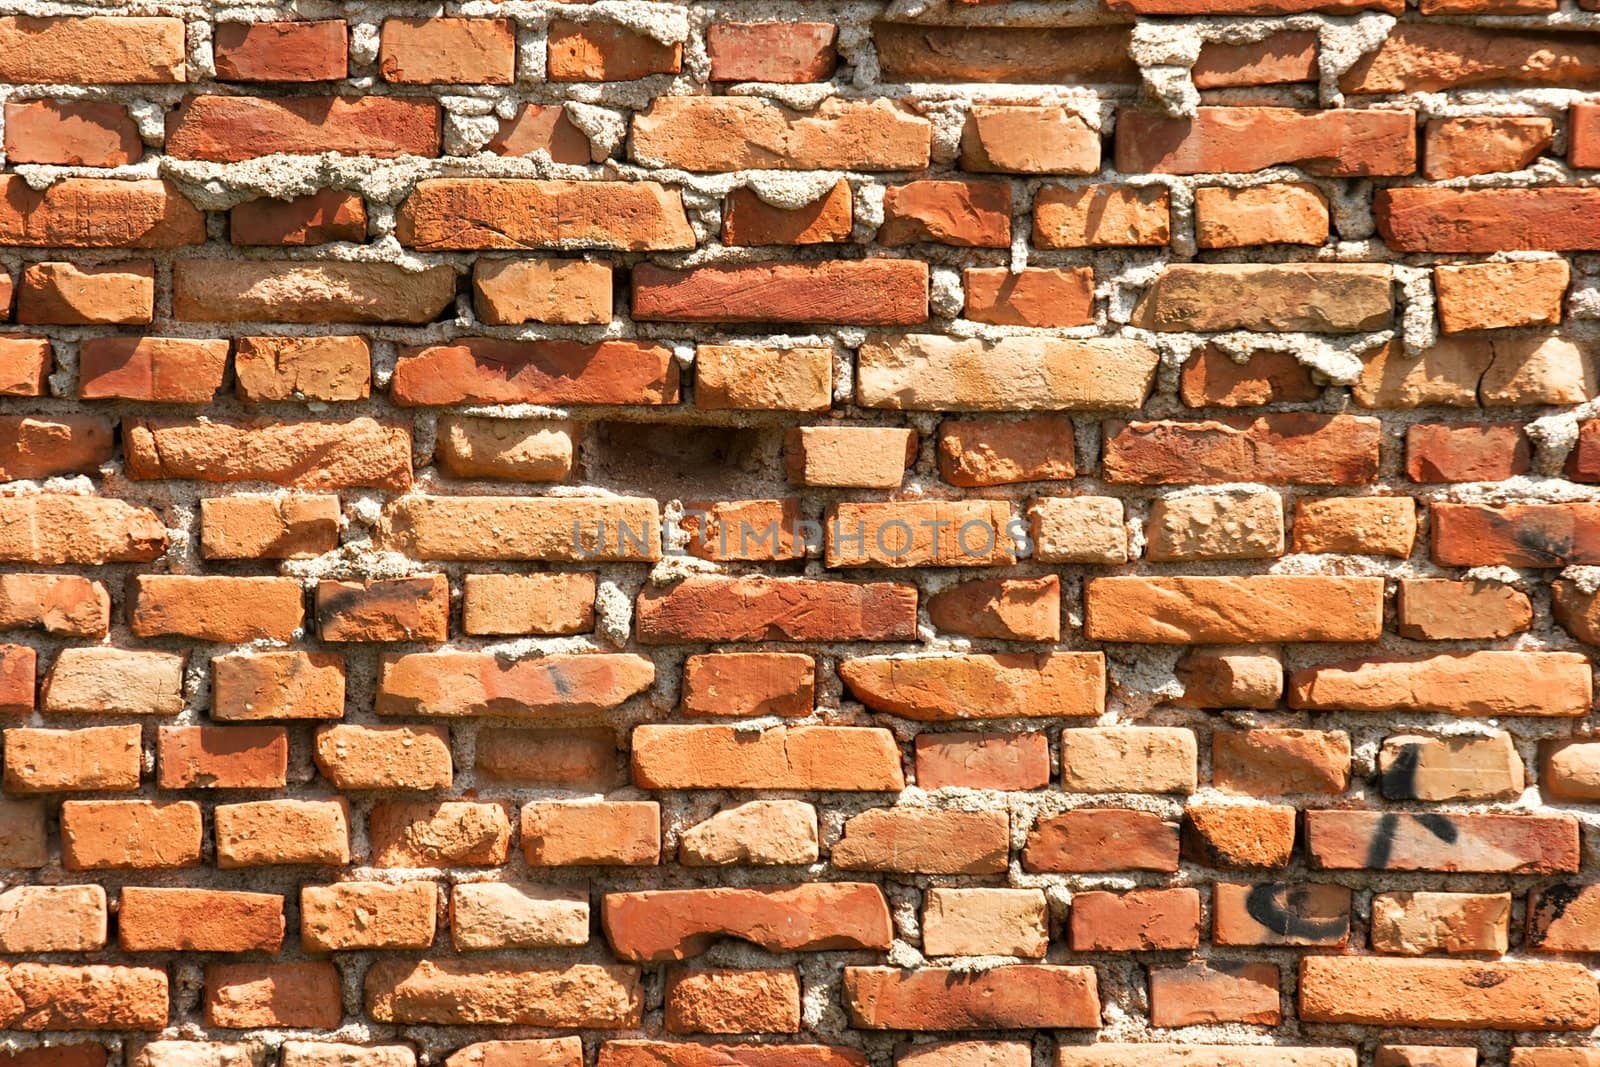 Brick wall with small red bricks